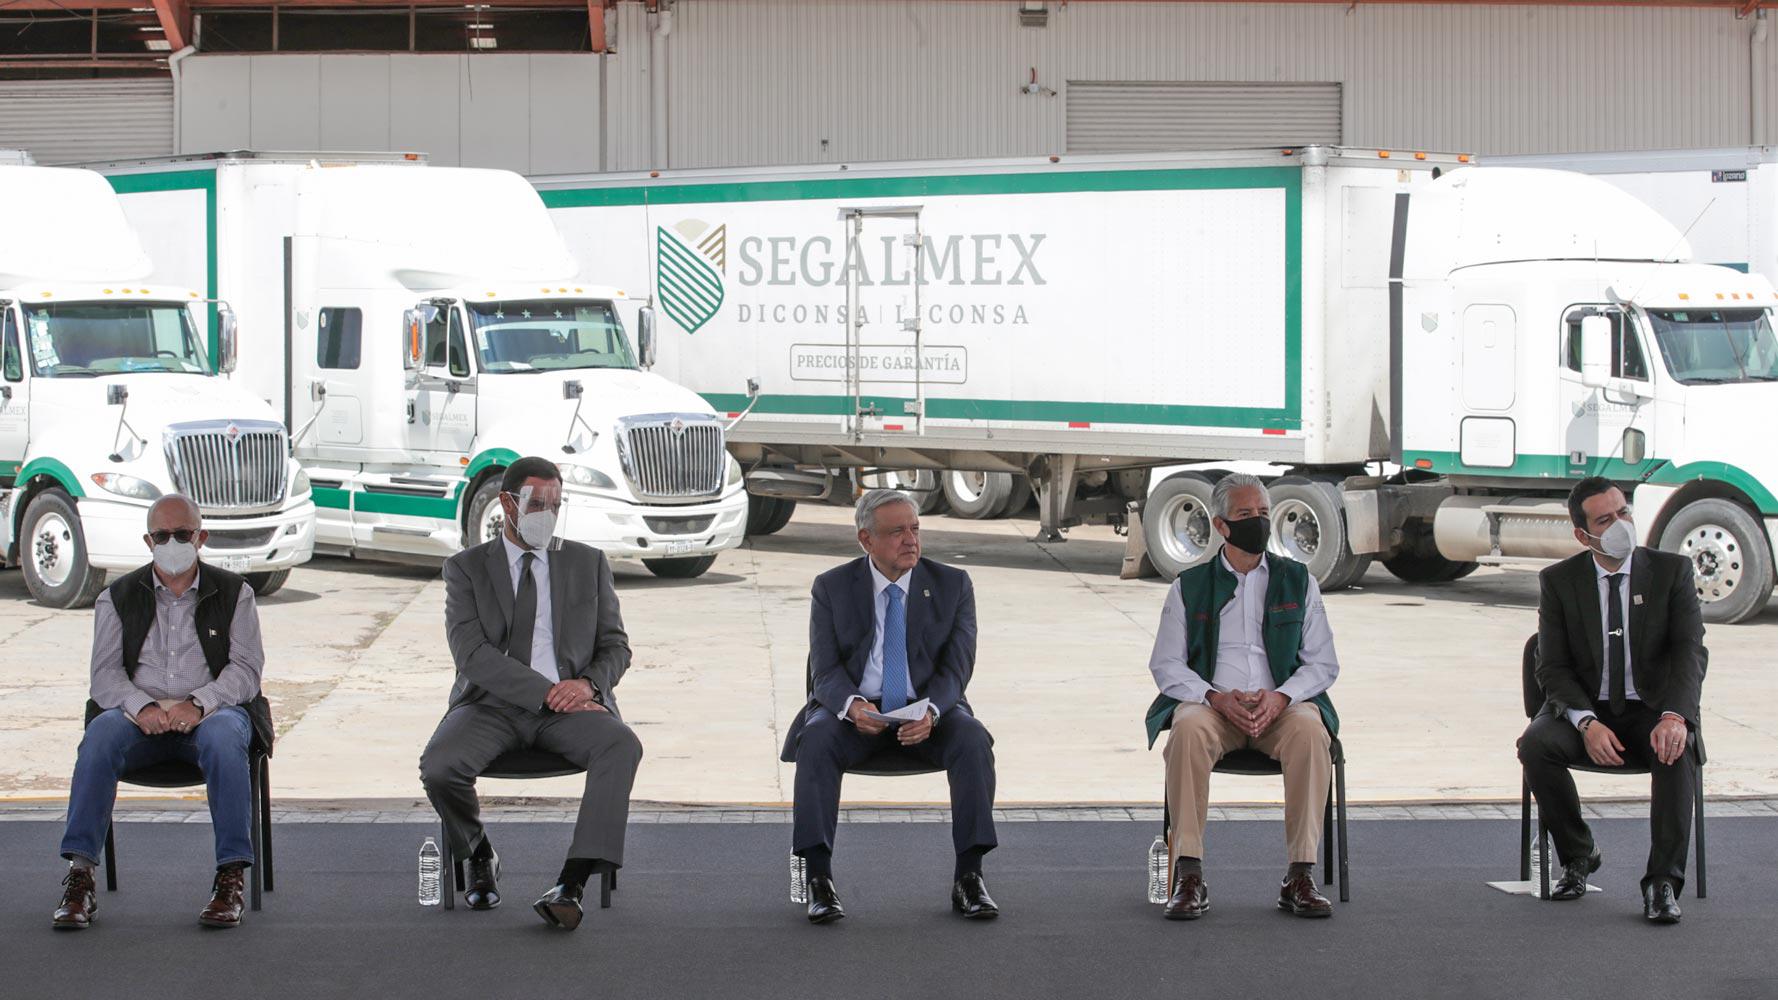 $!Centro de distribución de Segalmex en Zacatecas, donde estuvo el Presidente de México en 2020.